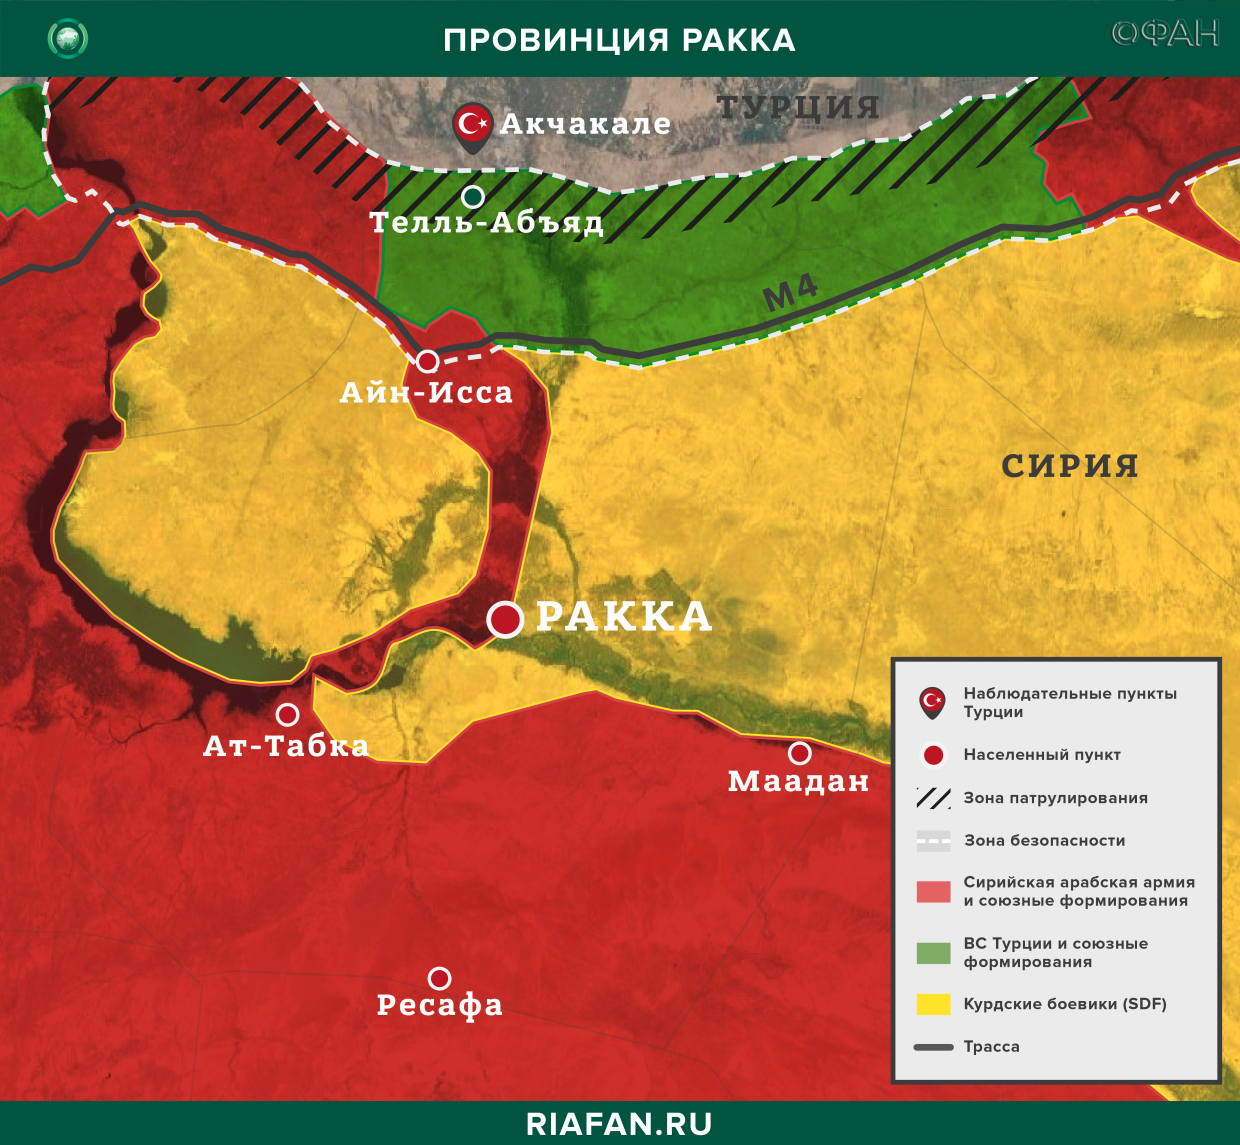 Resultados diarios de Siria para 1 Agosto 06.00: SDF вербуют в свои ряды несовершеннолетних, атака ХТШ в Идлибе